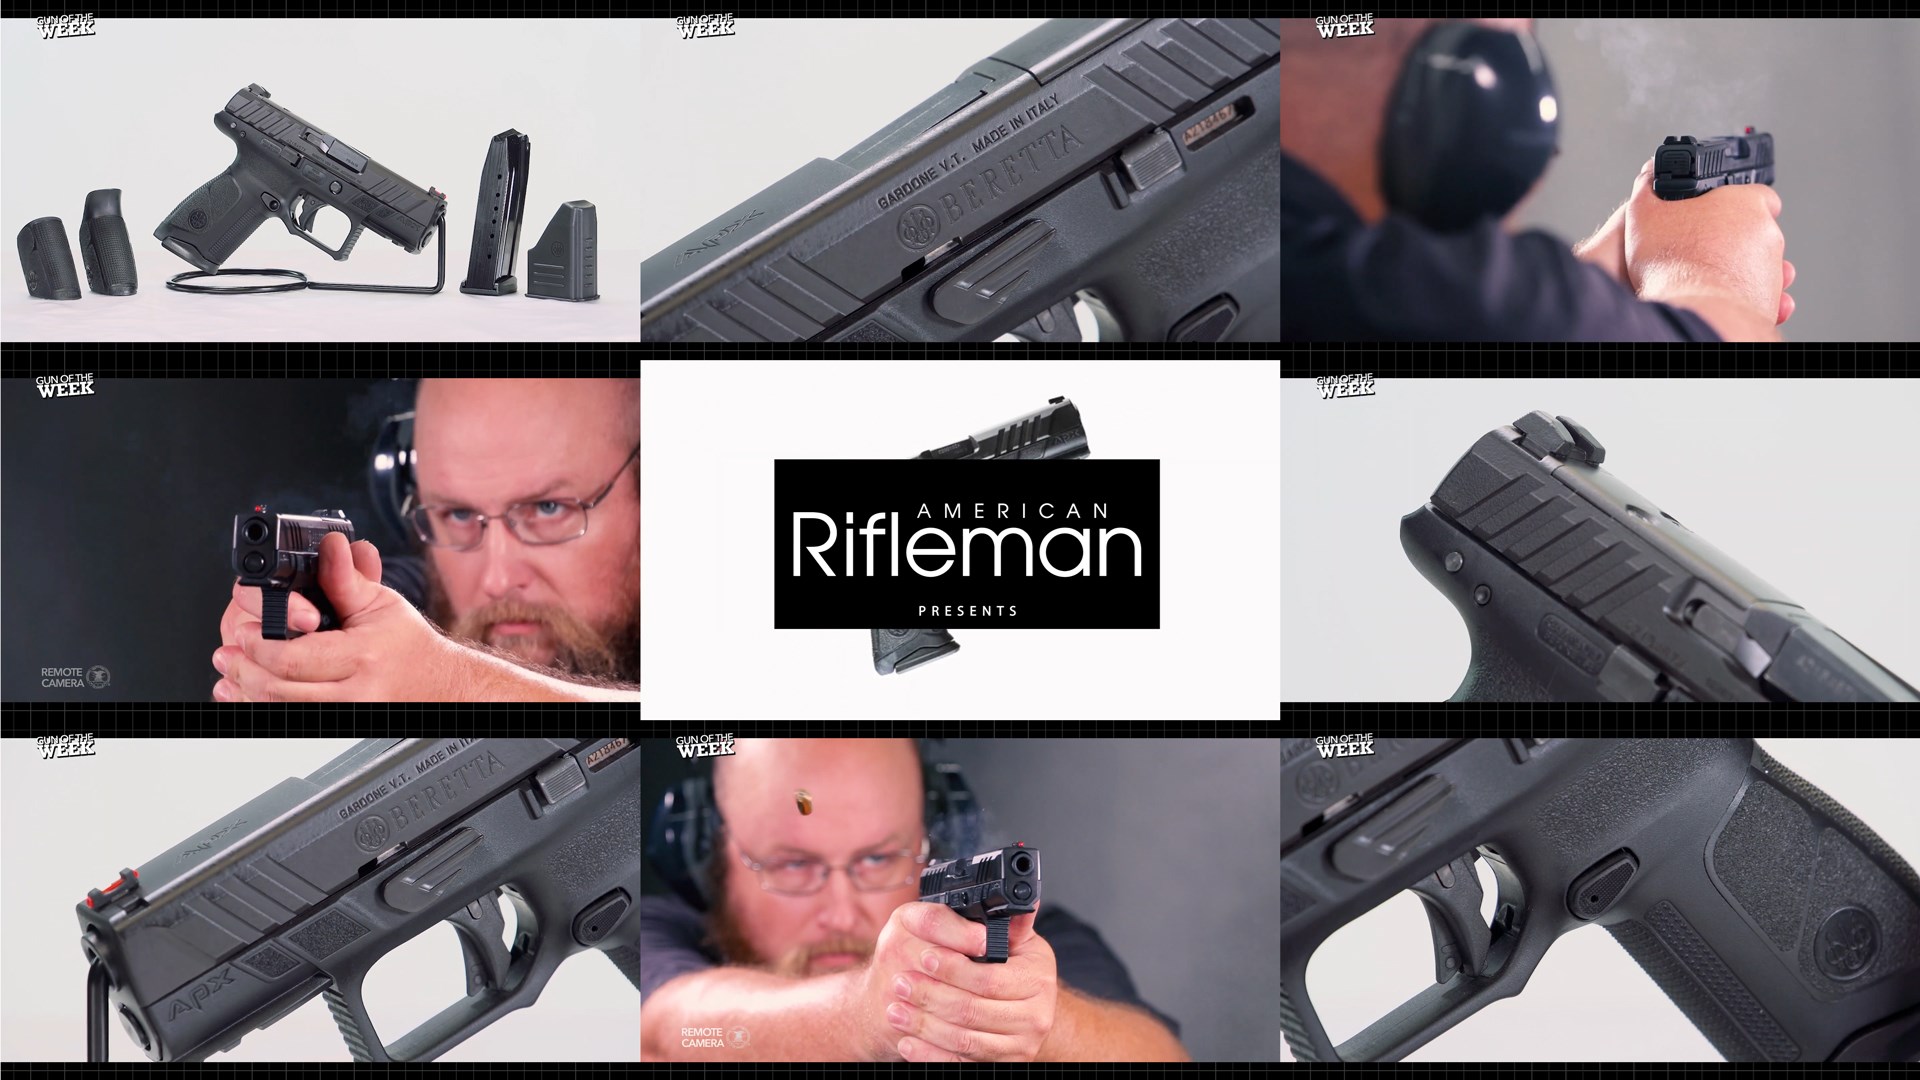 9 images mosaic tiles showing detail images of Beretta APX A1 Compact 9 mm pistol handgun black concealed carry man shooting indoors target range gun